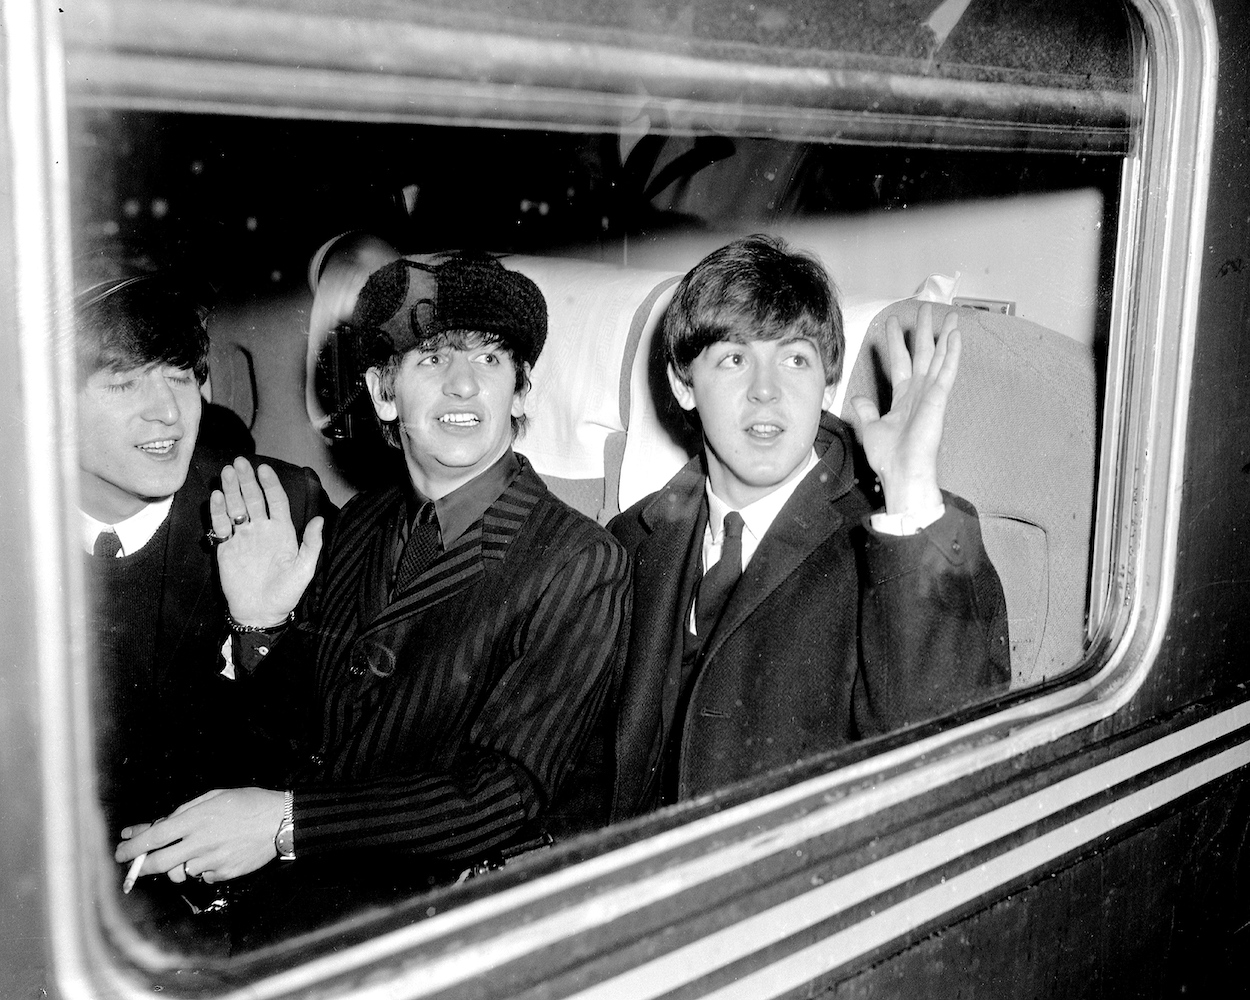 Ringo Starr (middle), John Lennon, and Paul McCartney on board a New York City train in 1964.